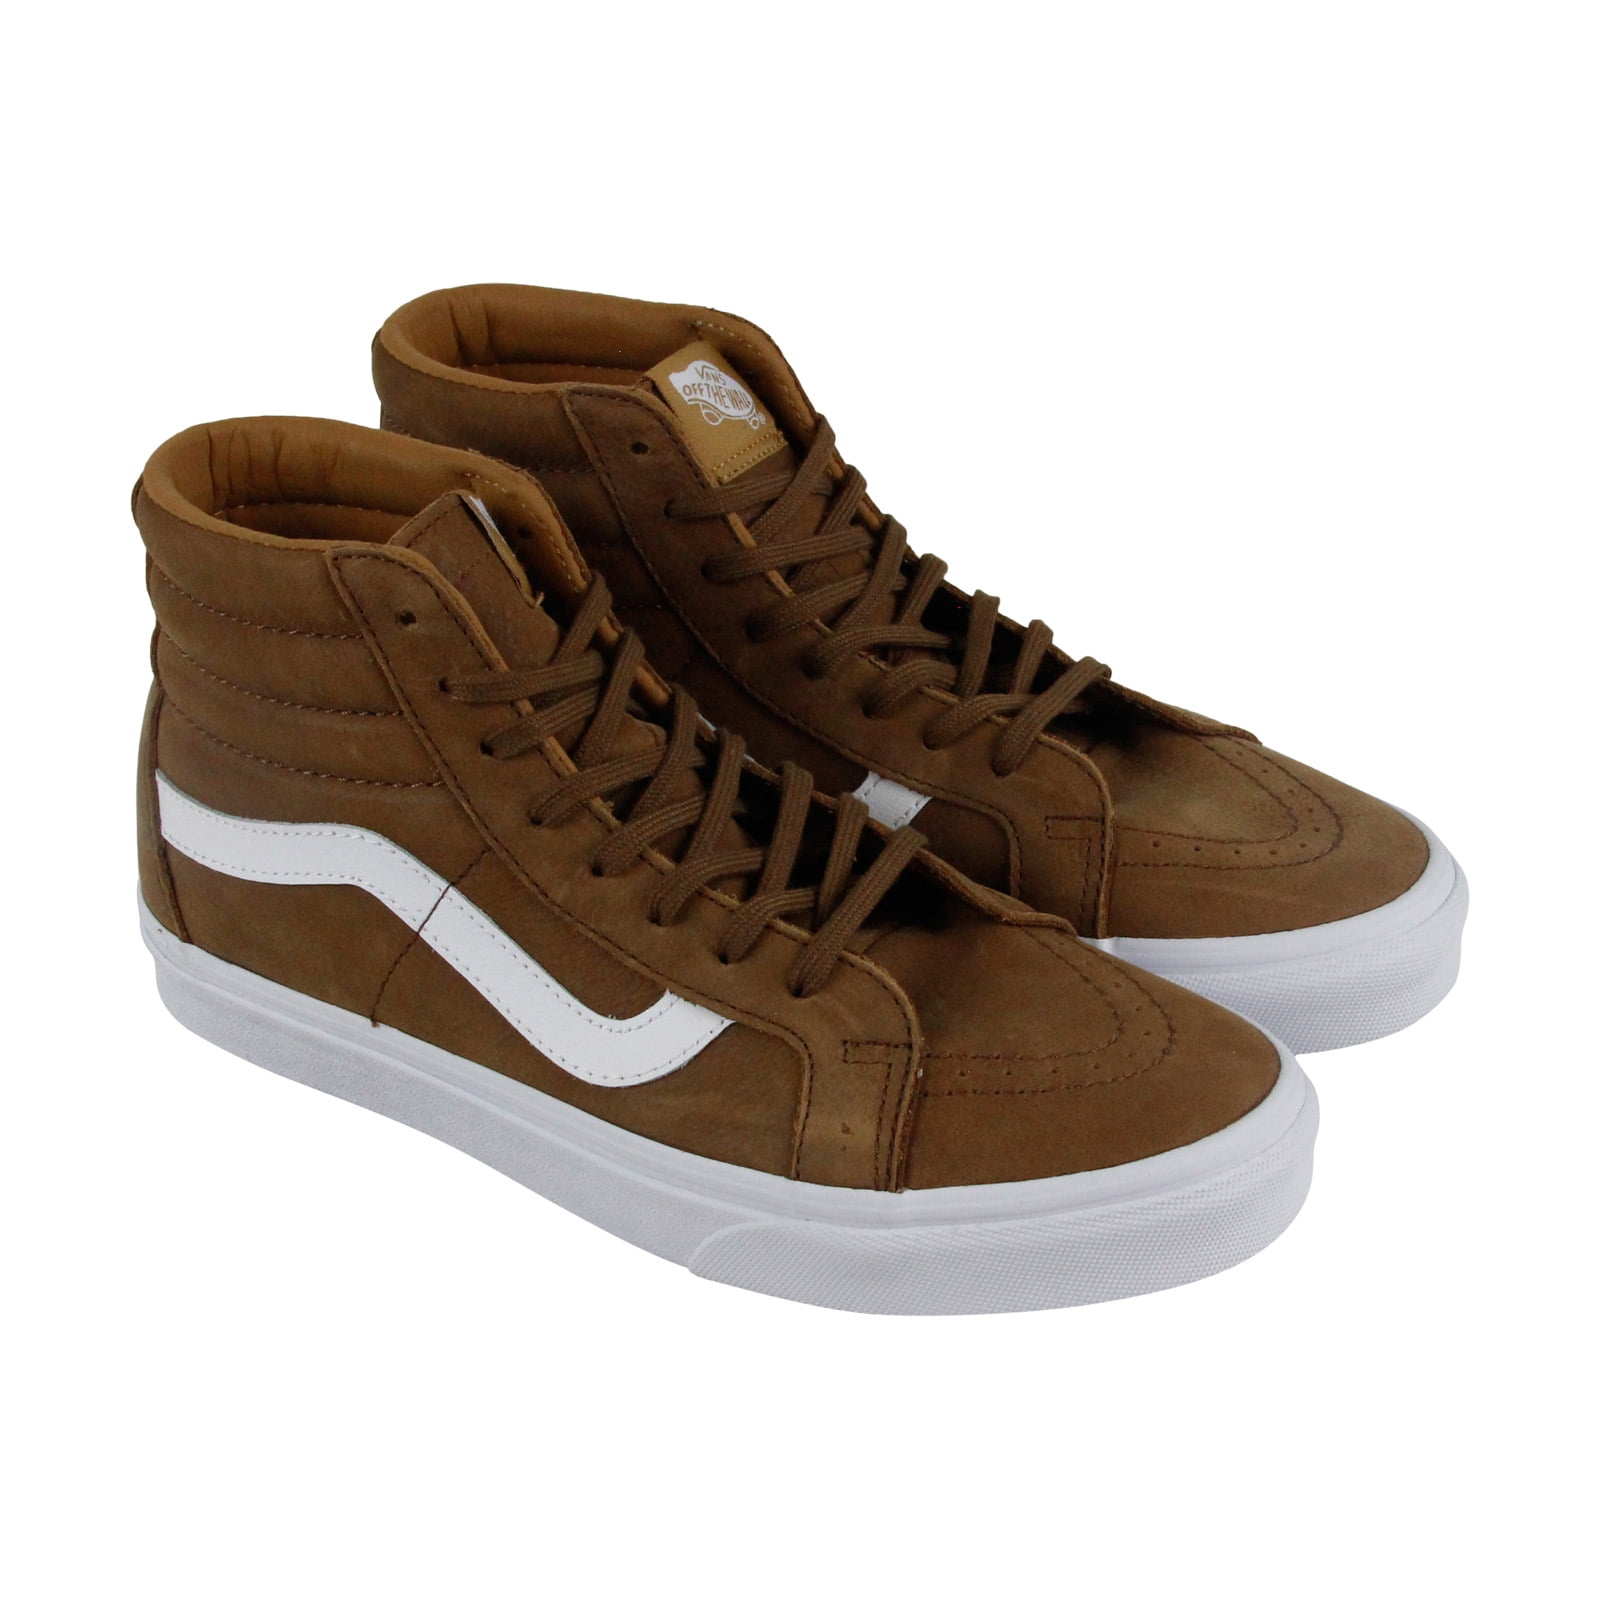 Springboard median Steward Vans Sk8 Hi Reissue Mens Brown Leather High Top Lace Up Sneakers Shoes -  Walmart.com